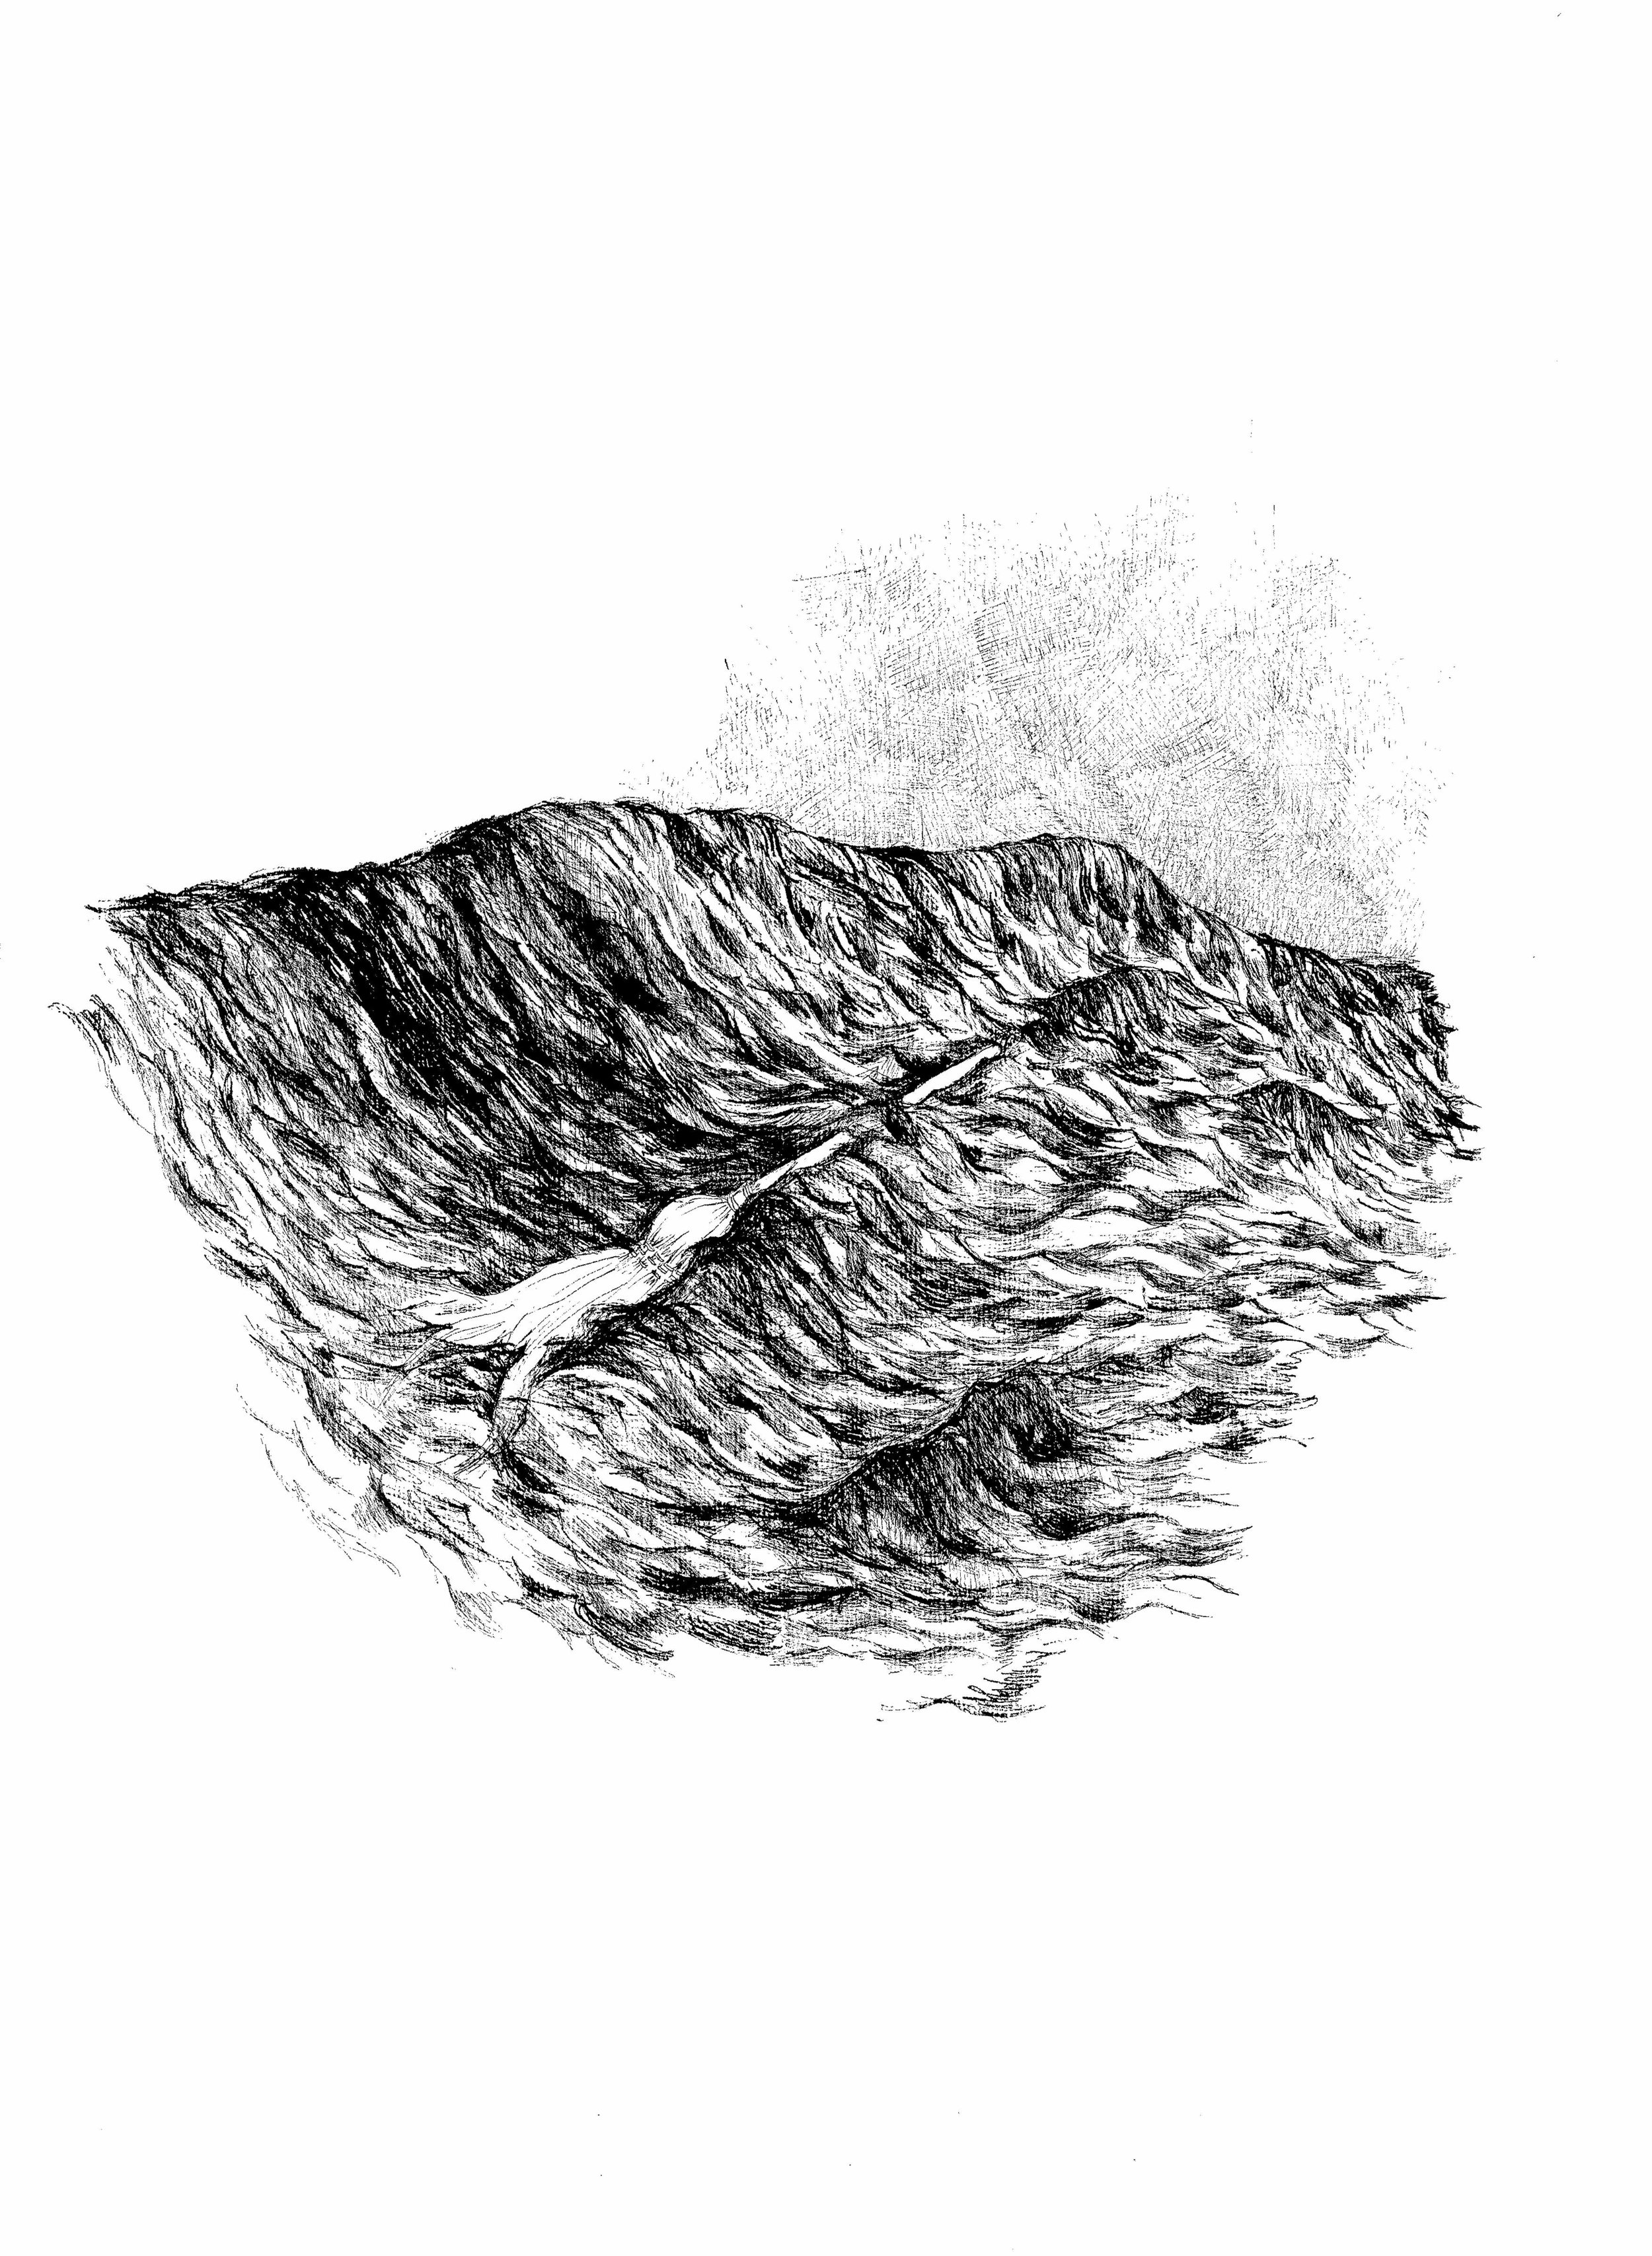   The Waves/Waifs (Sea)  2009 Pen on paper 38 x 28 cm 